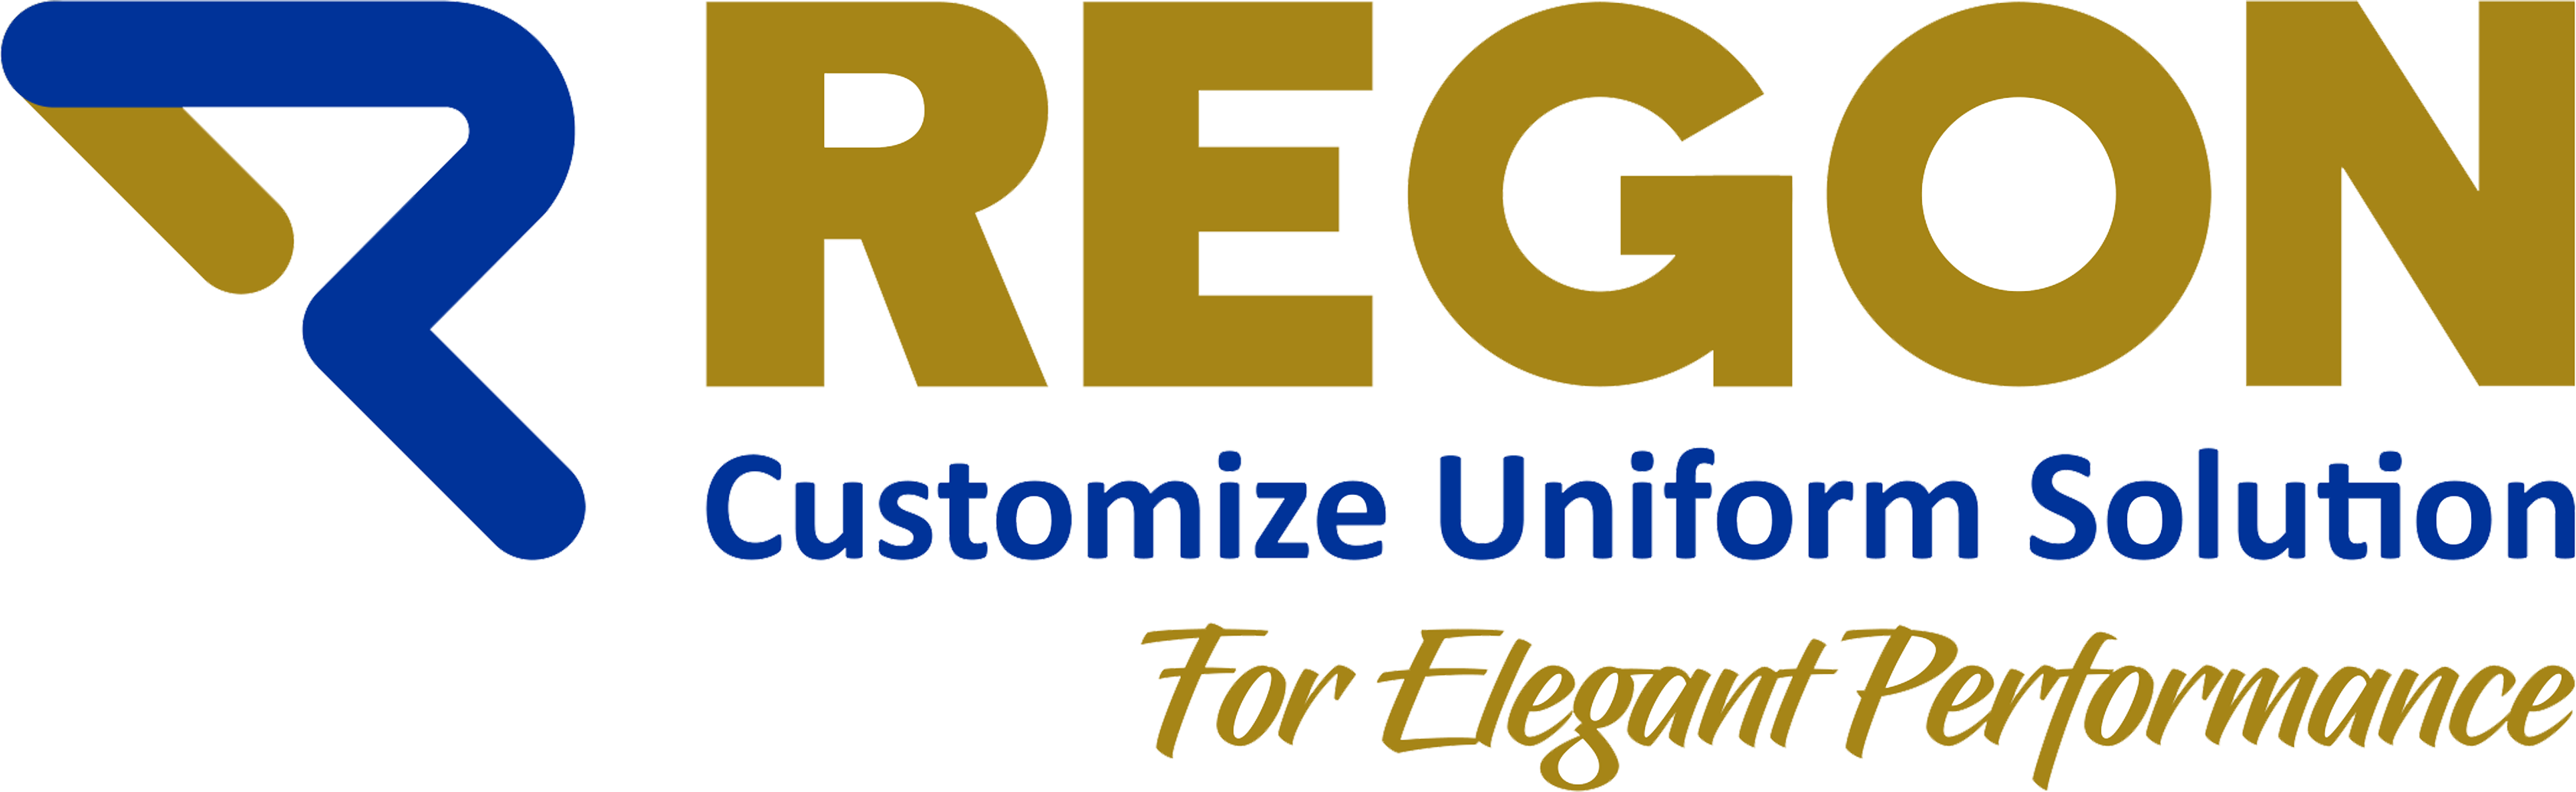 REGON – Customize Uniform Solution For Elegant Performance